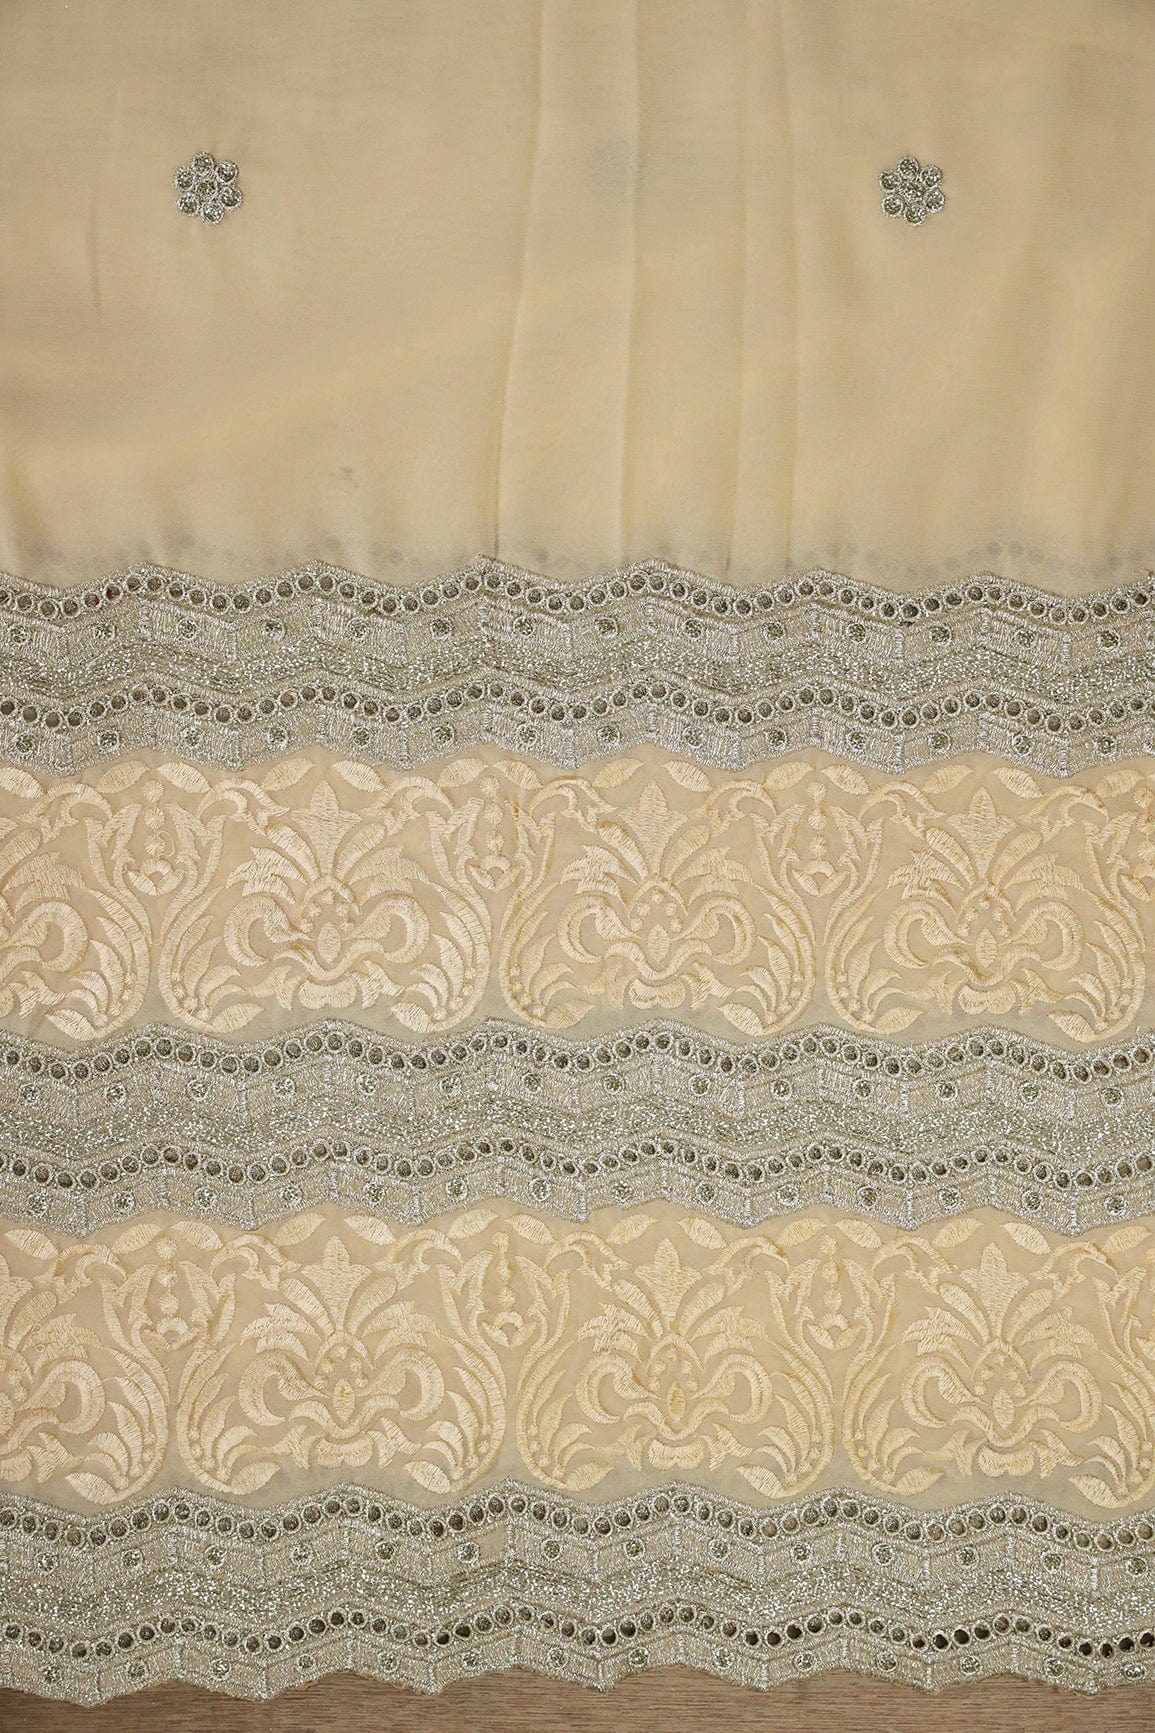 Big Width''56'' Cream Thread With Zari Ethnic Embroidery Work On Cream Georgette Fabric With Border - doeraa